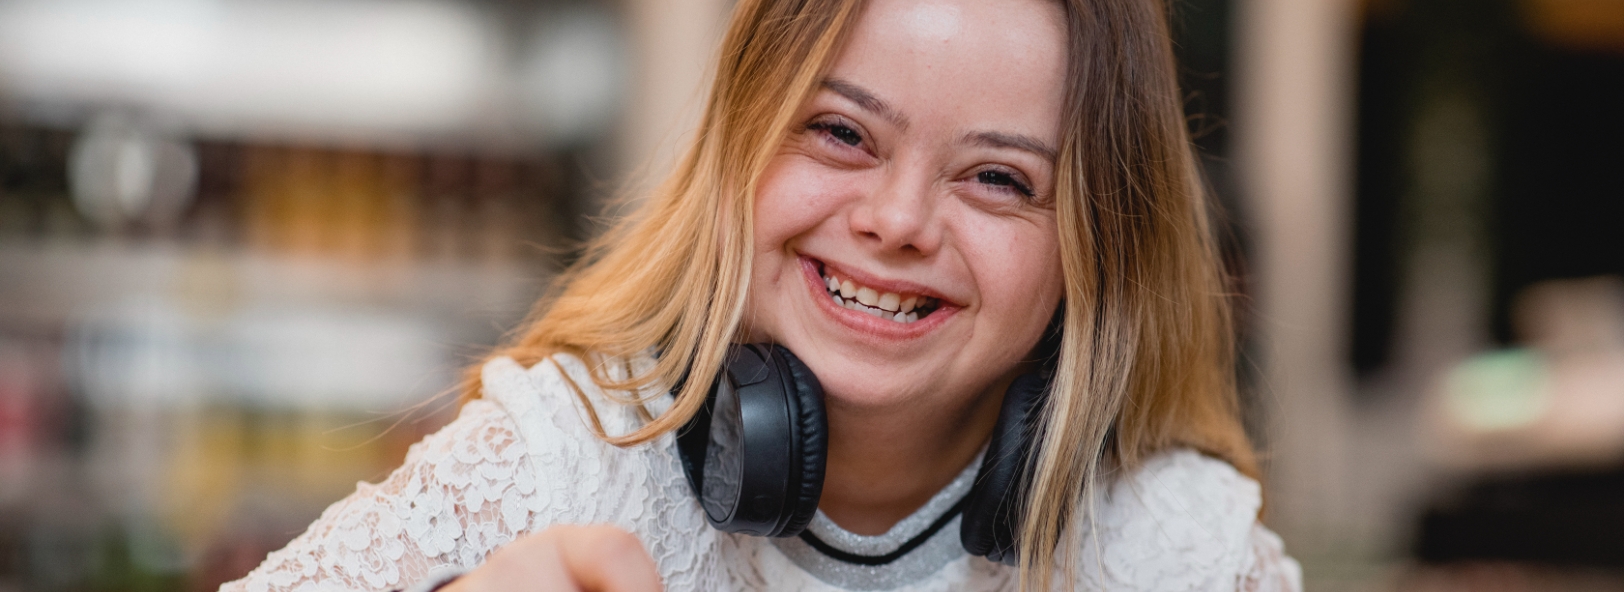 Girl smiles with headphones